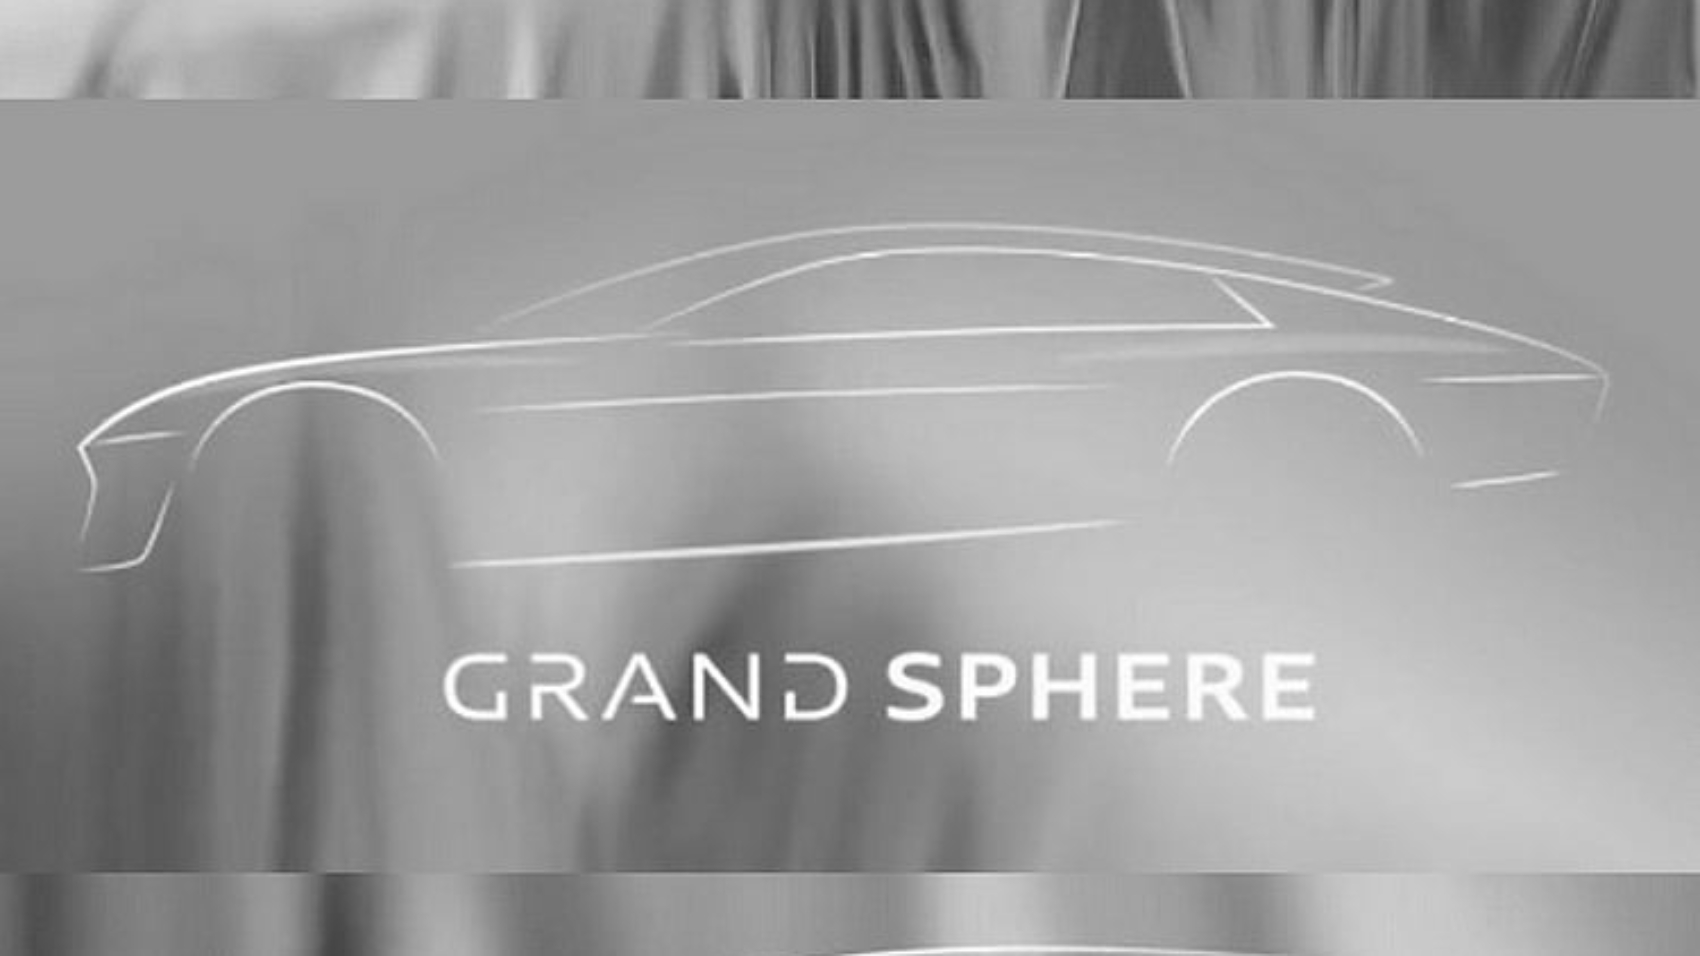 Audi Sky Sphere, Grand Sphere, Urban Sphere concepts